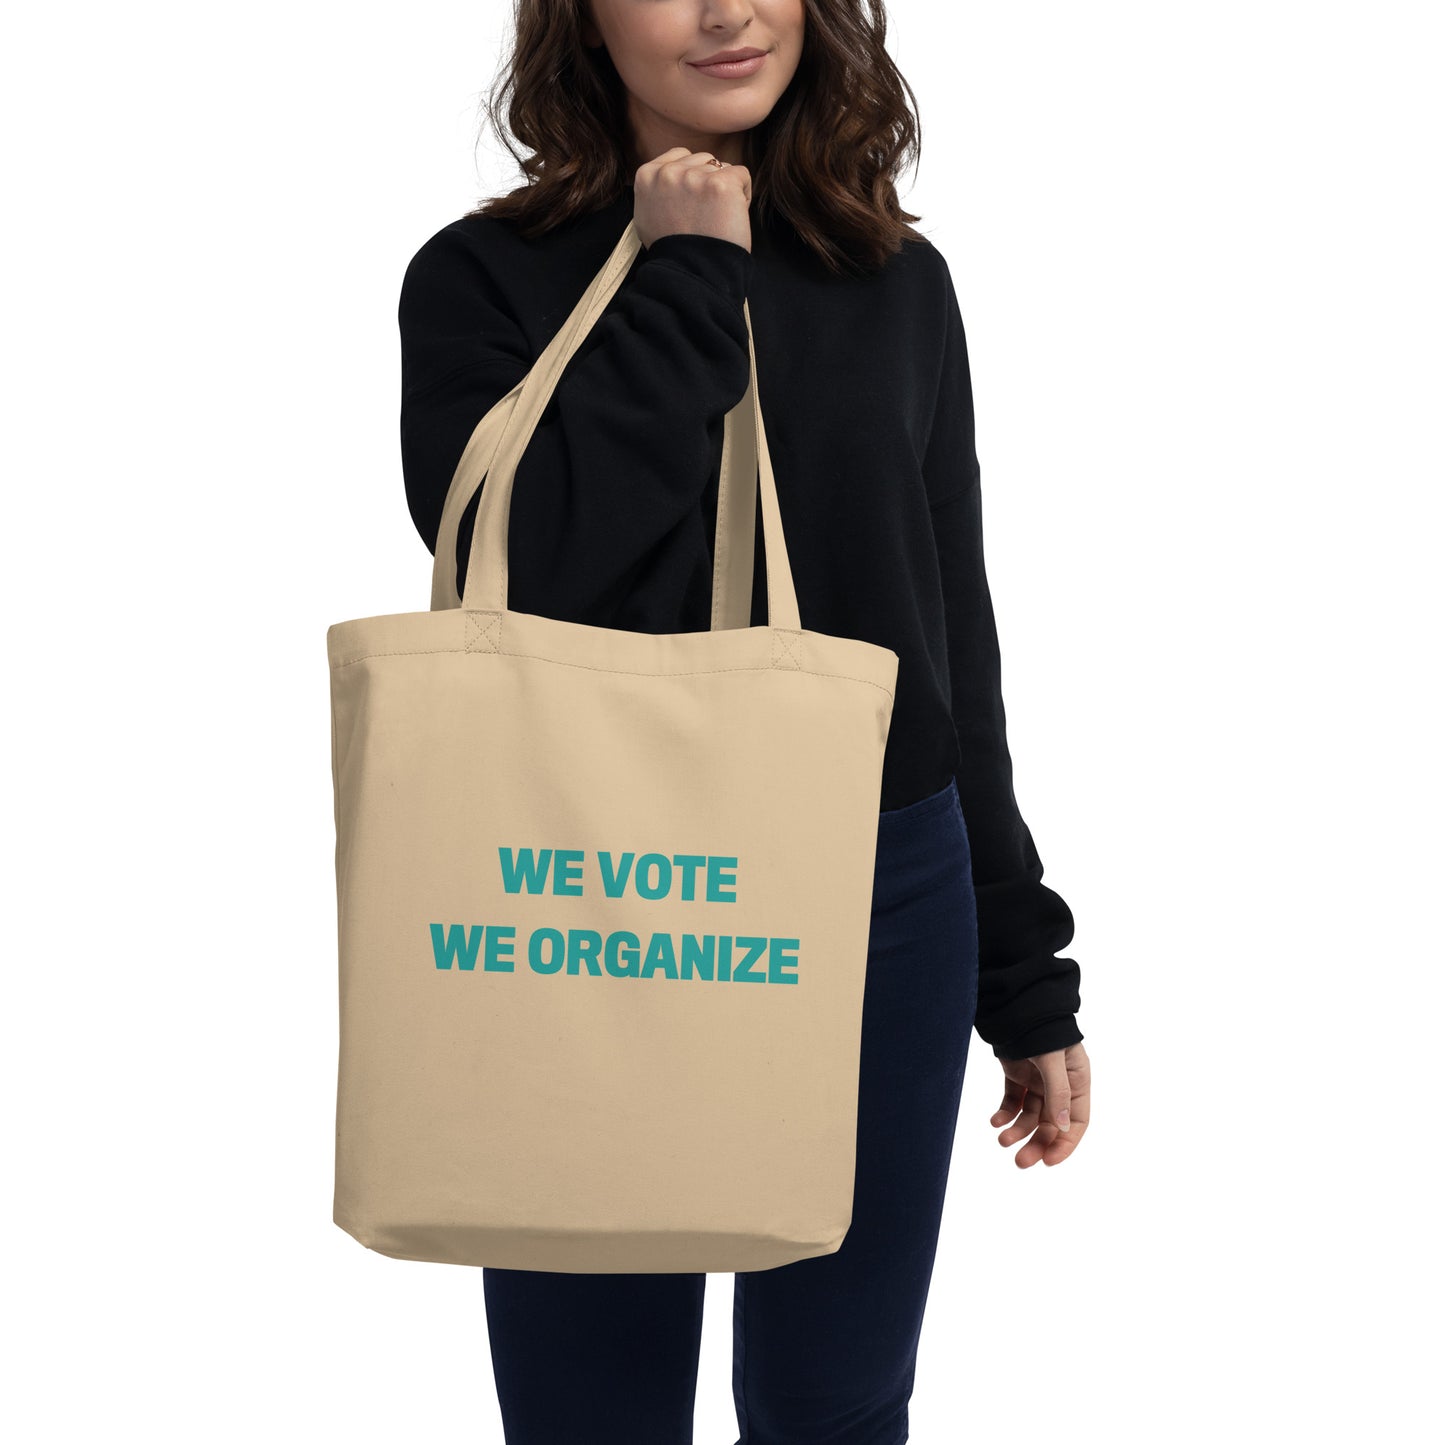 We Vote, We Organize Tote bag!